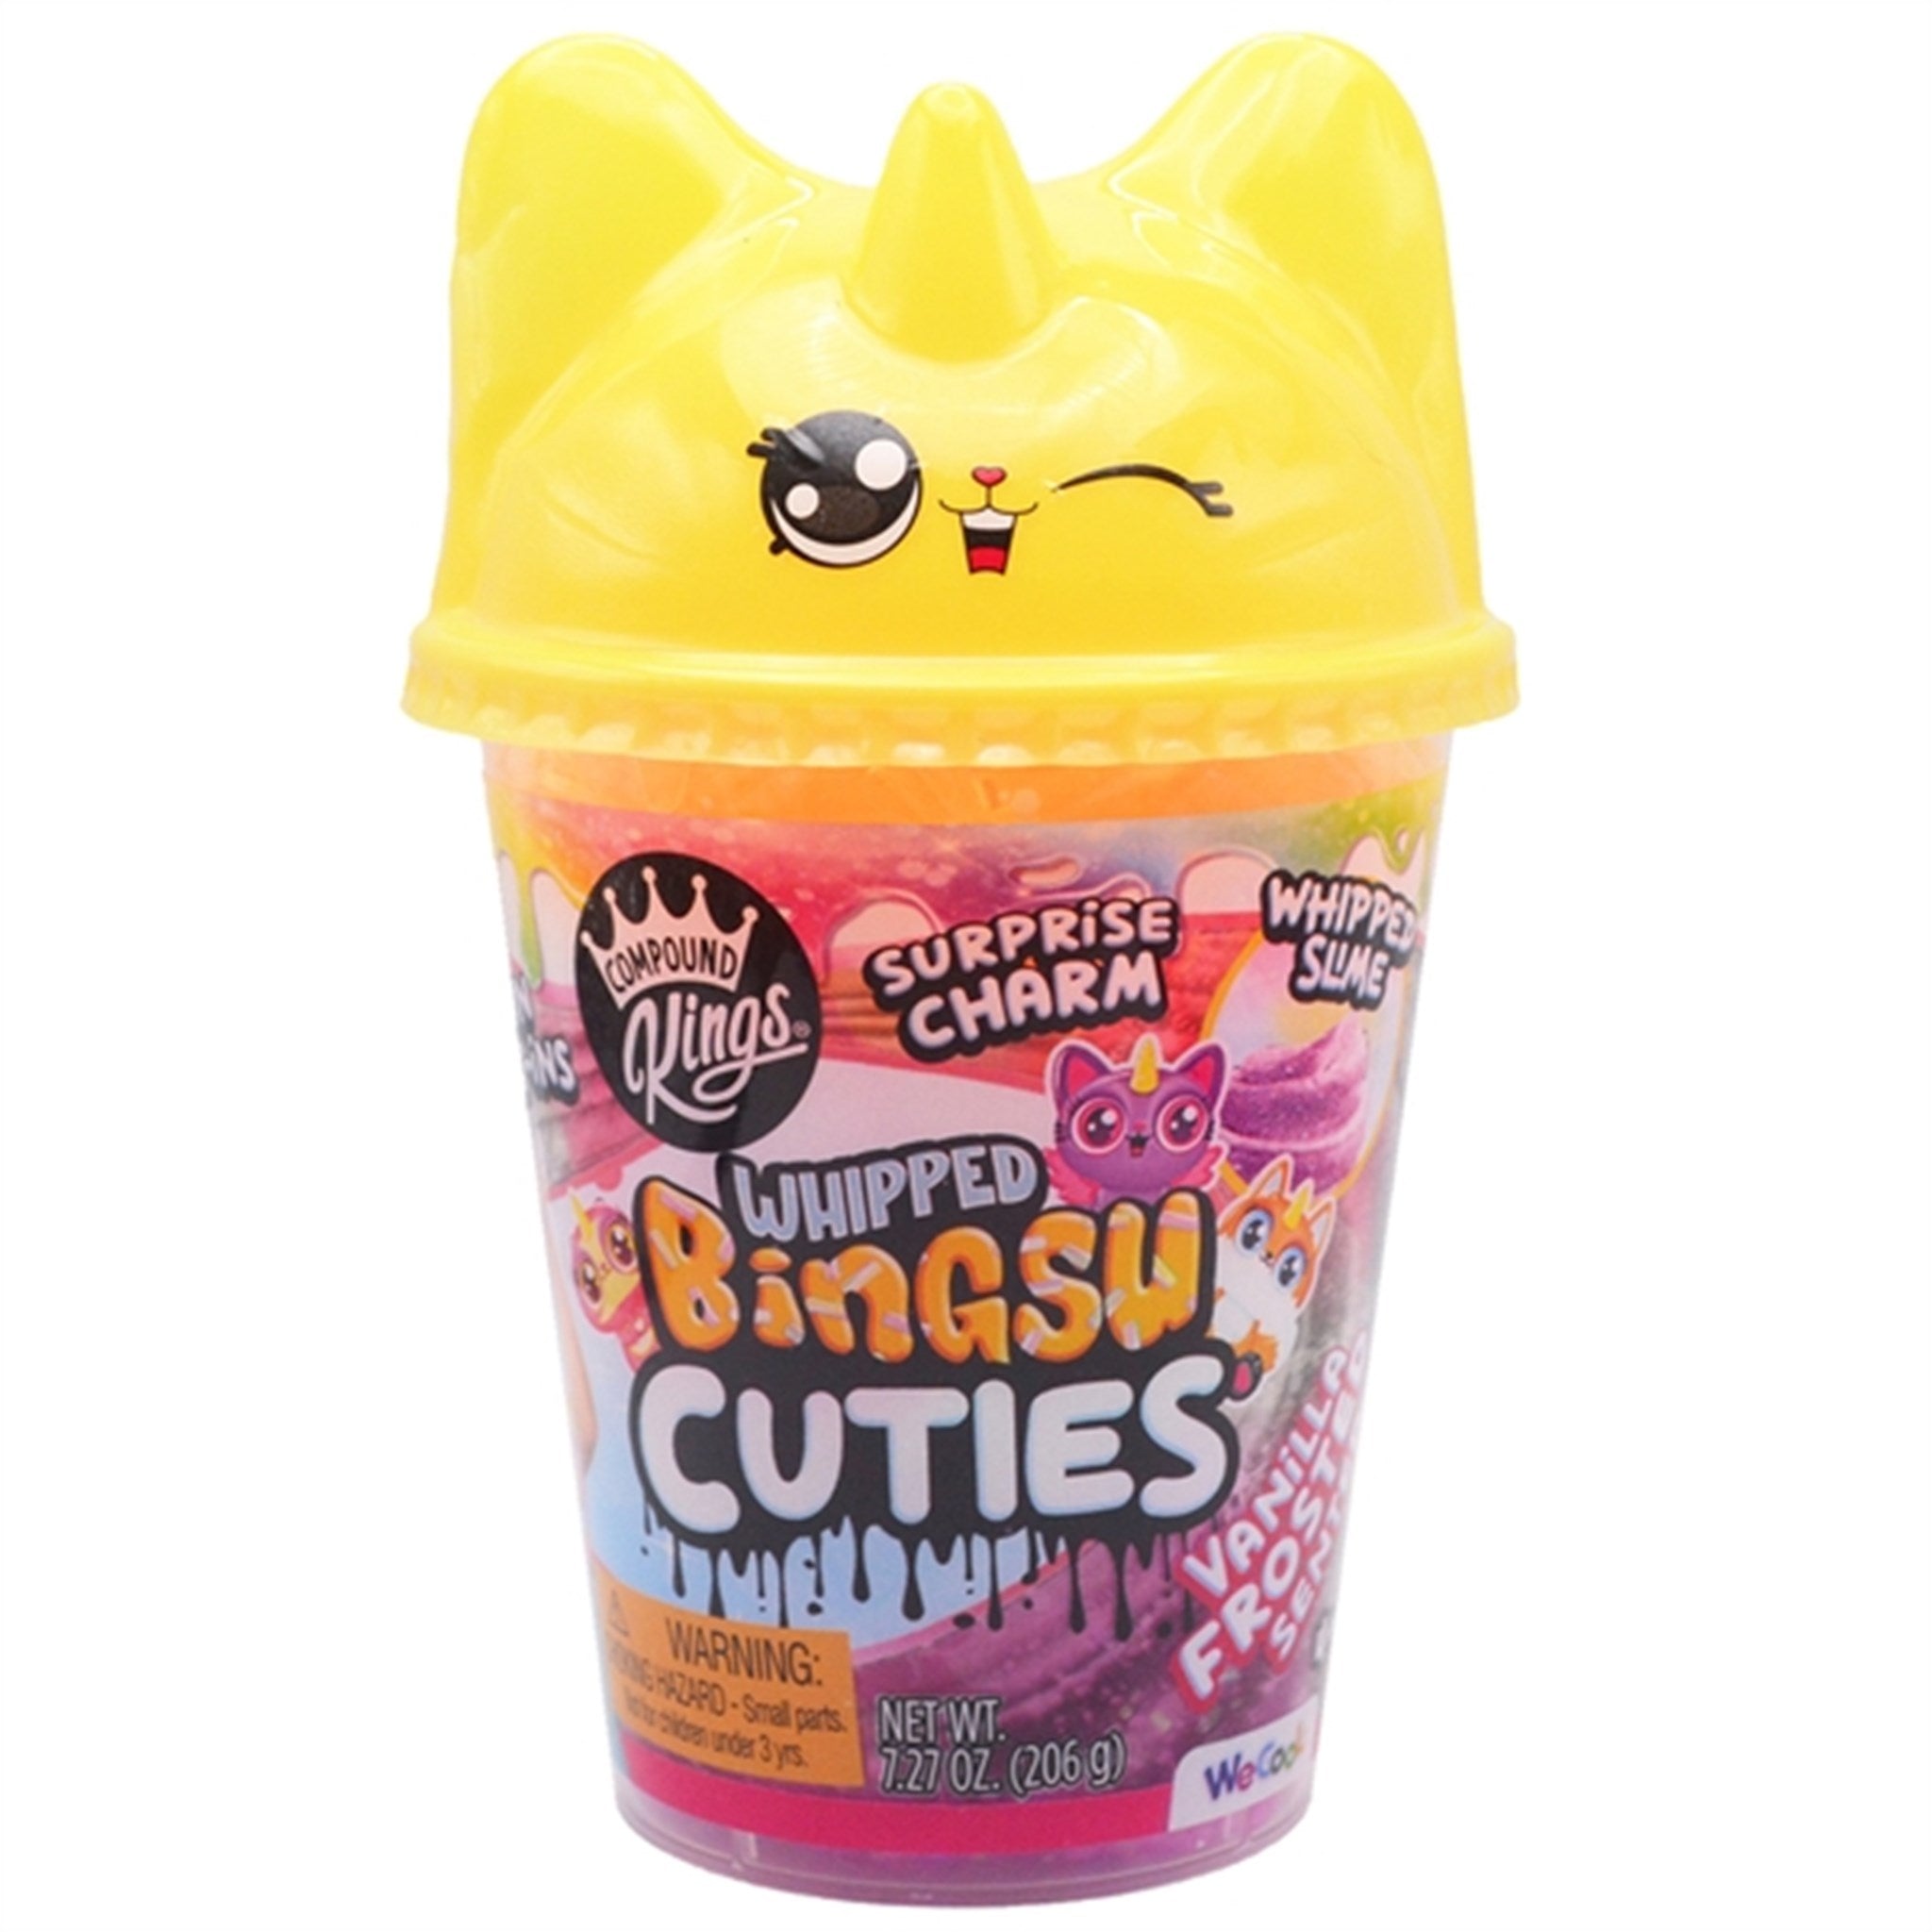 Compound Kings Slim Bingsu Cuties Vanilla Frosted